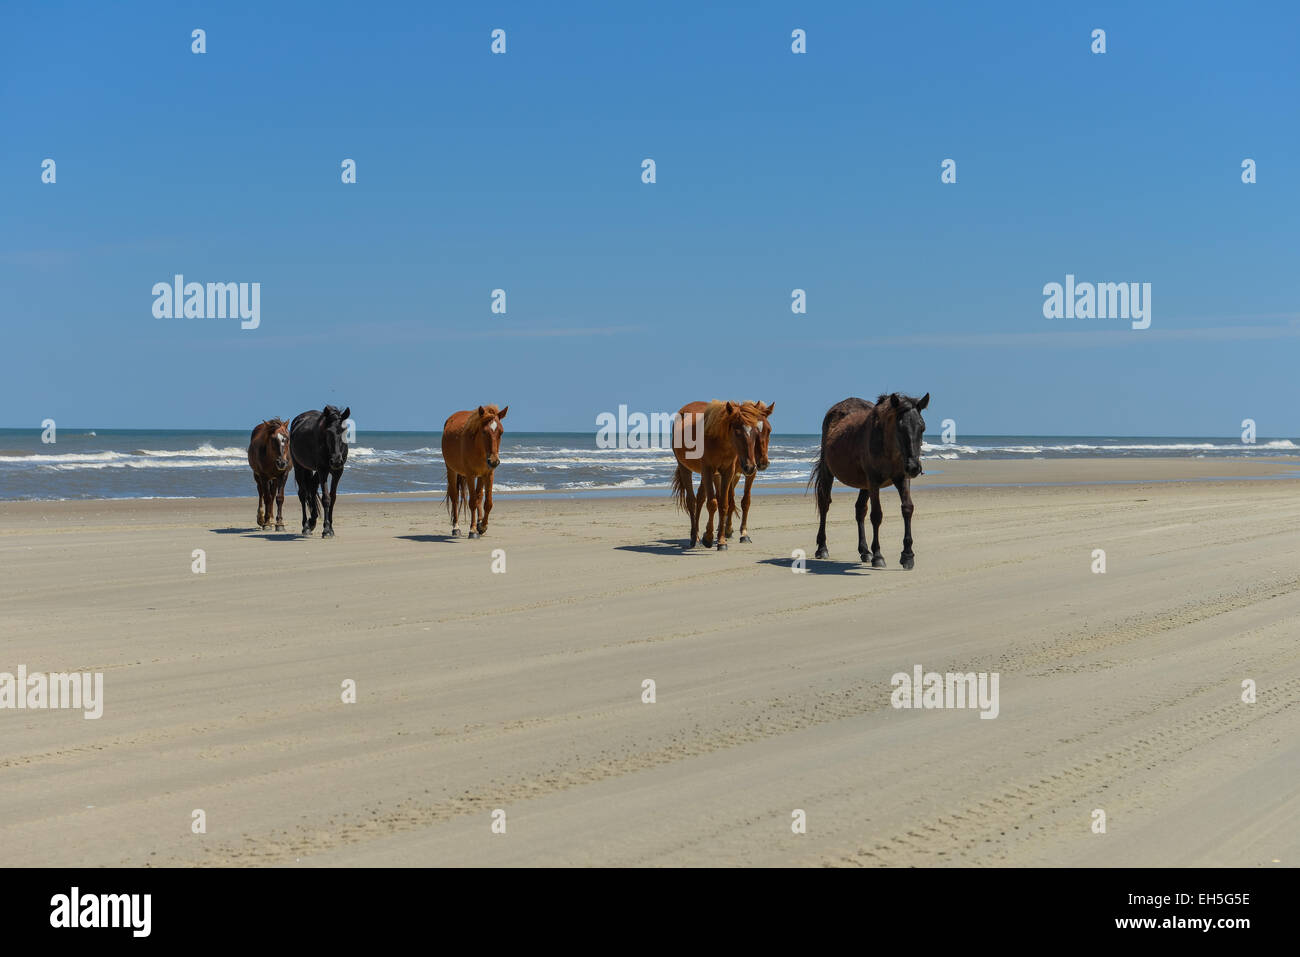 Spanish mustangs wild horses on the beach in north carolina Stock Photo